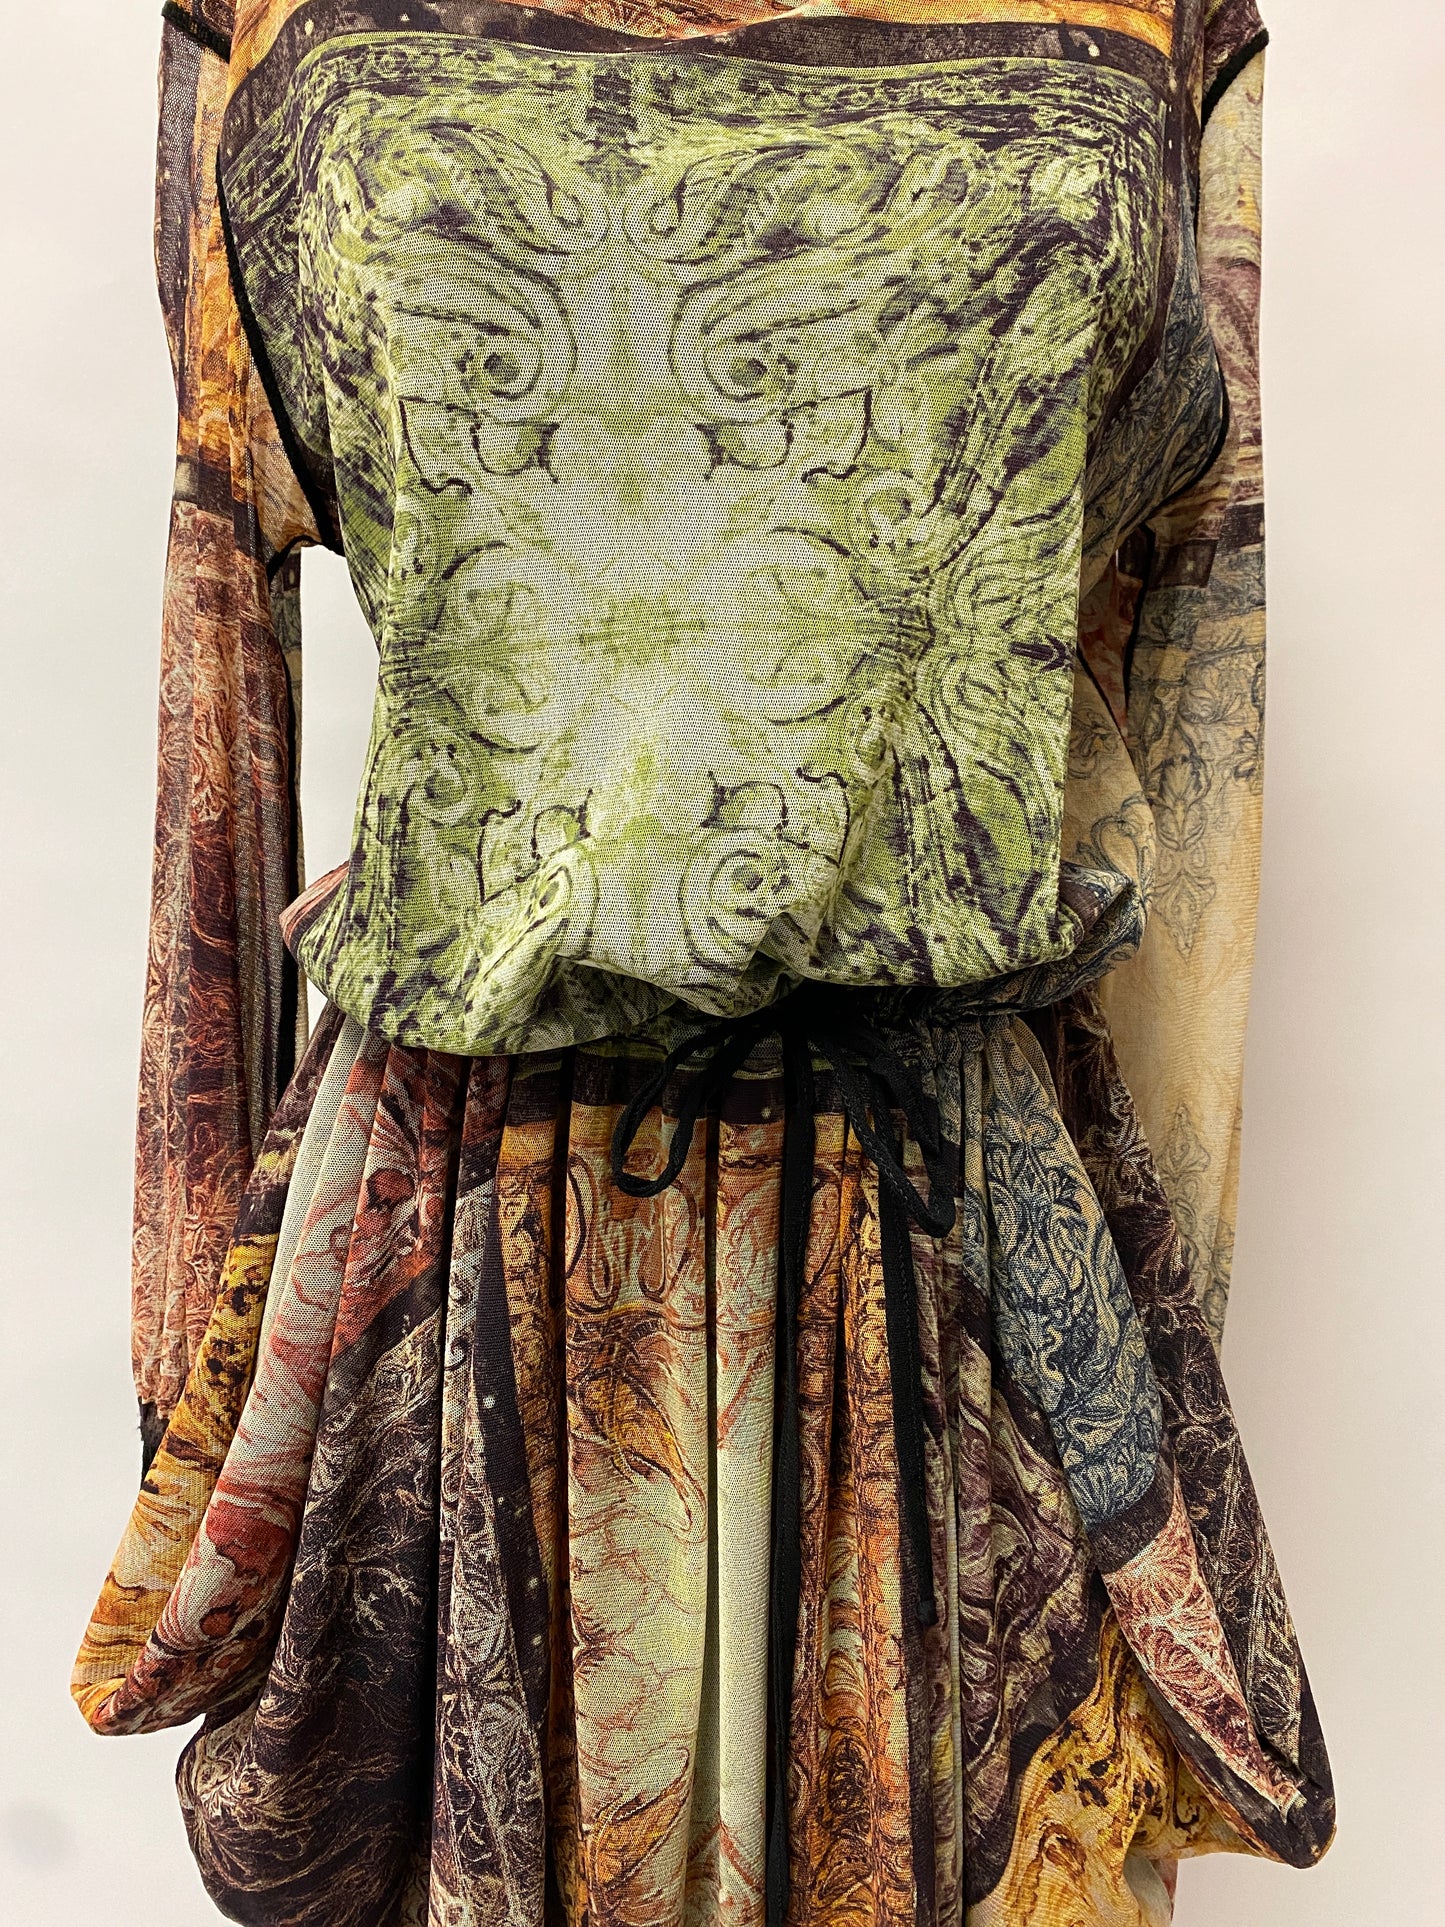 JEAN PAUL GAULTIER Multi-Colore Knit Mesh Long Sleeve Drawstring Dress | Size M